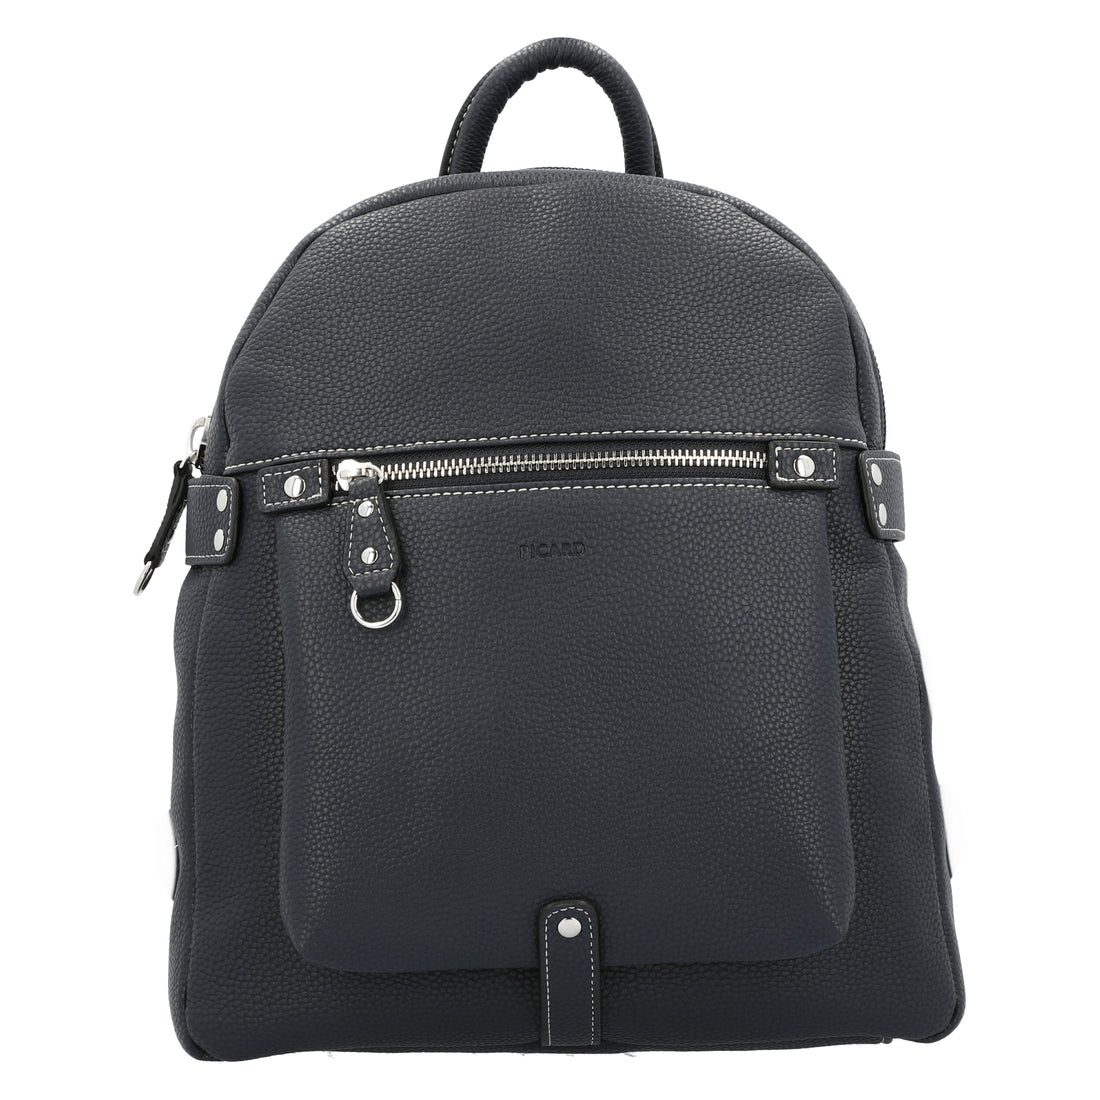 Backpack Loire 9809